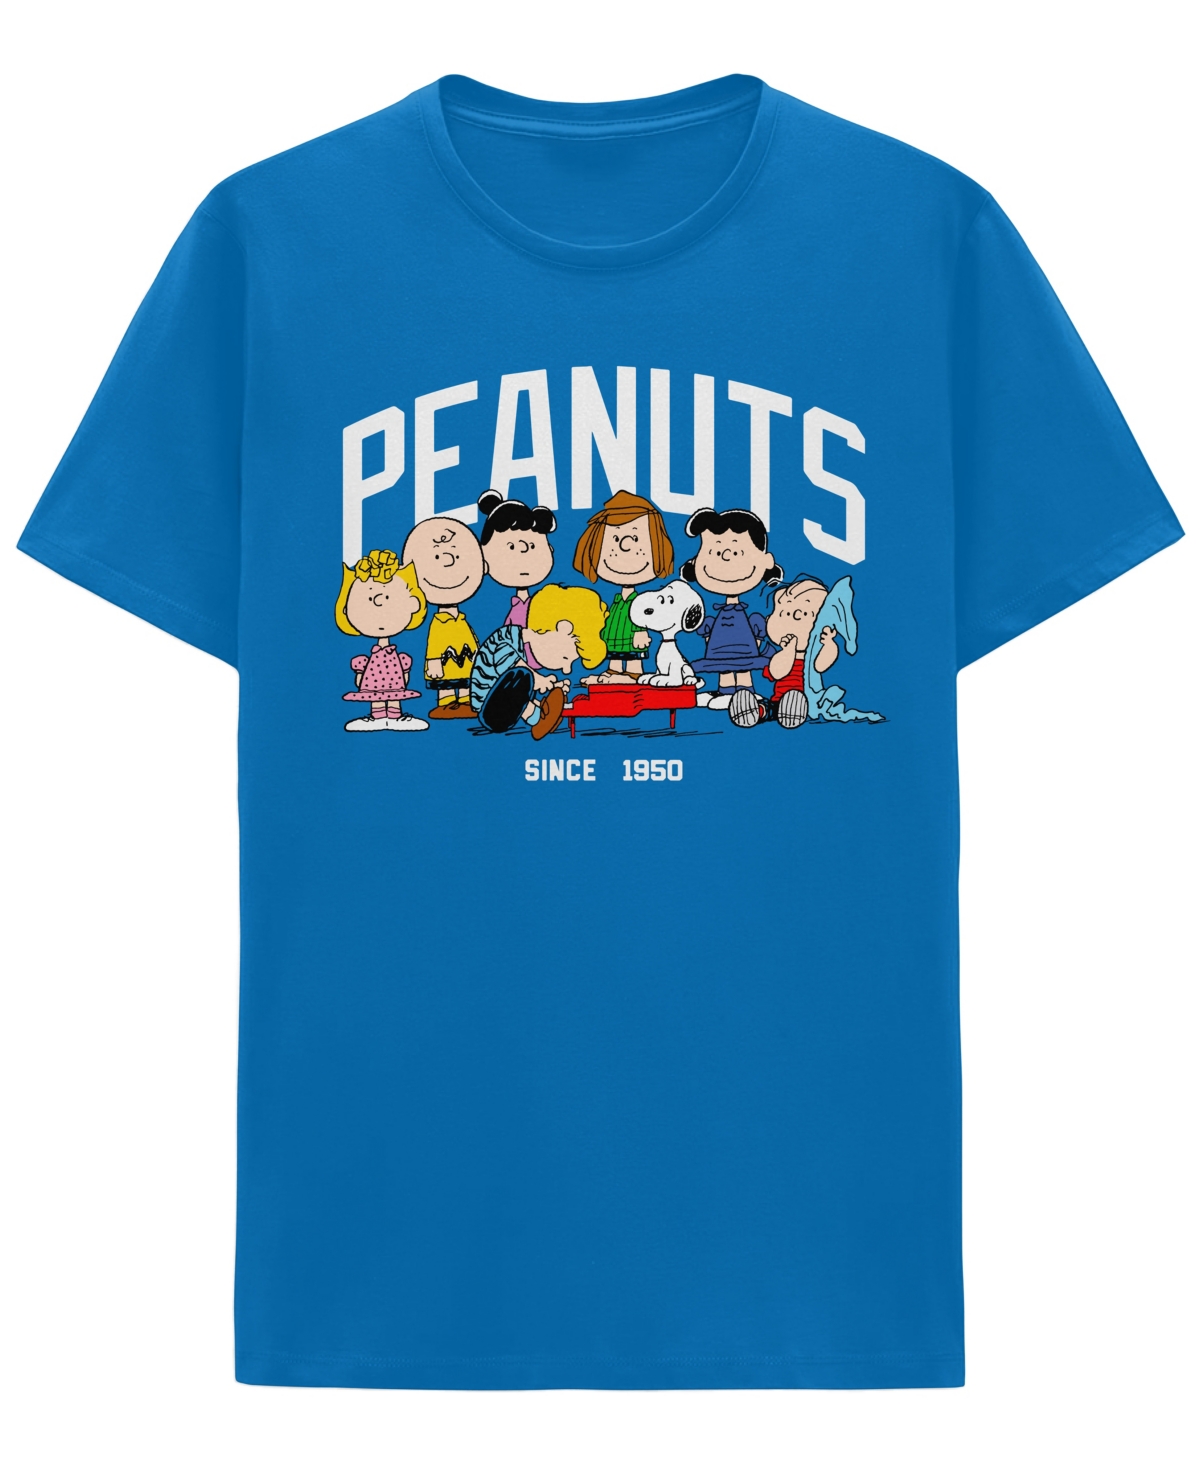 Men's Peanuts Short Sleeve T-shirt - Royal Blue